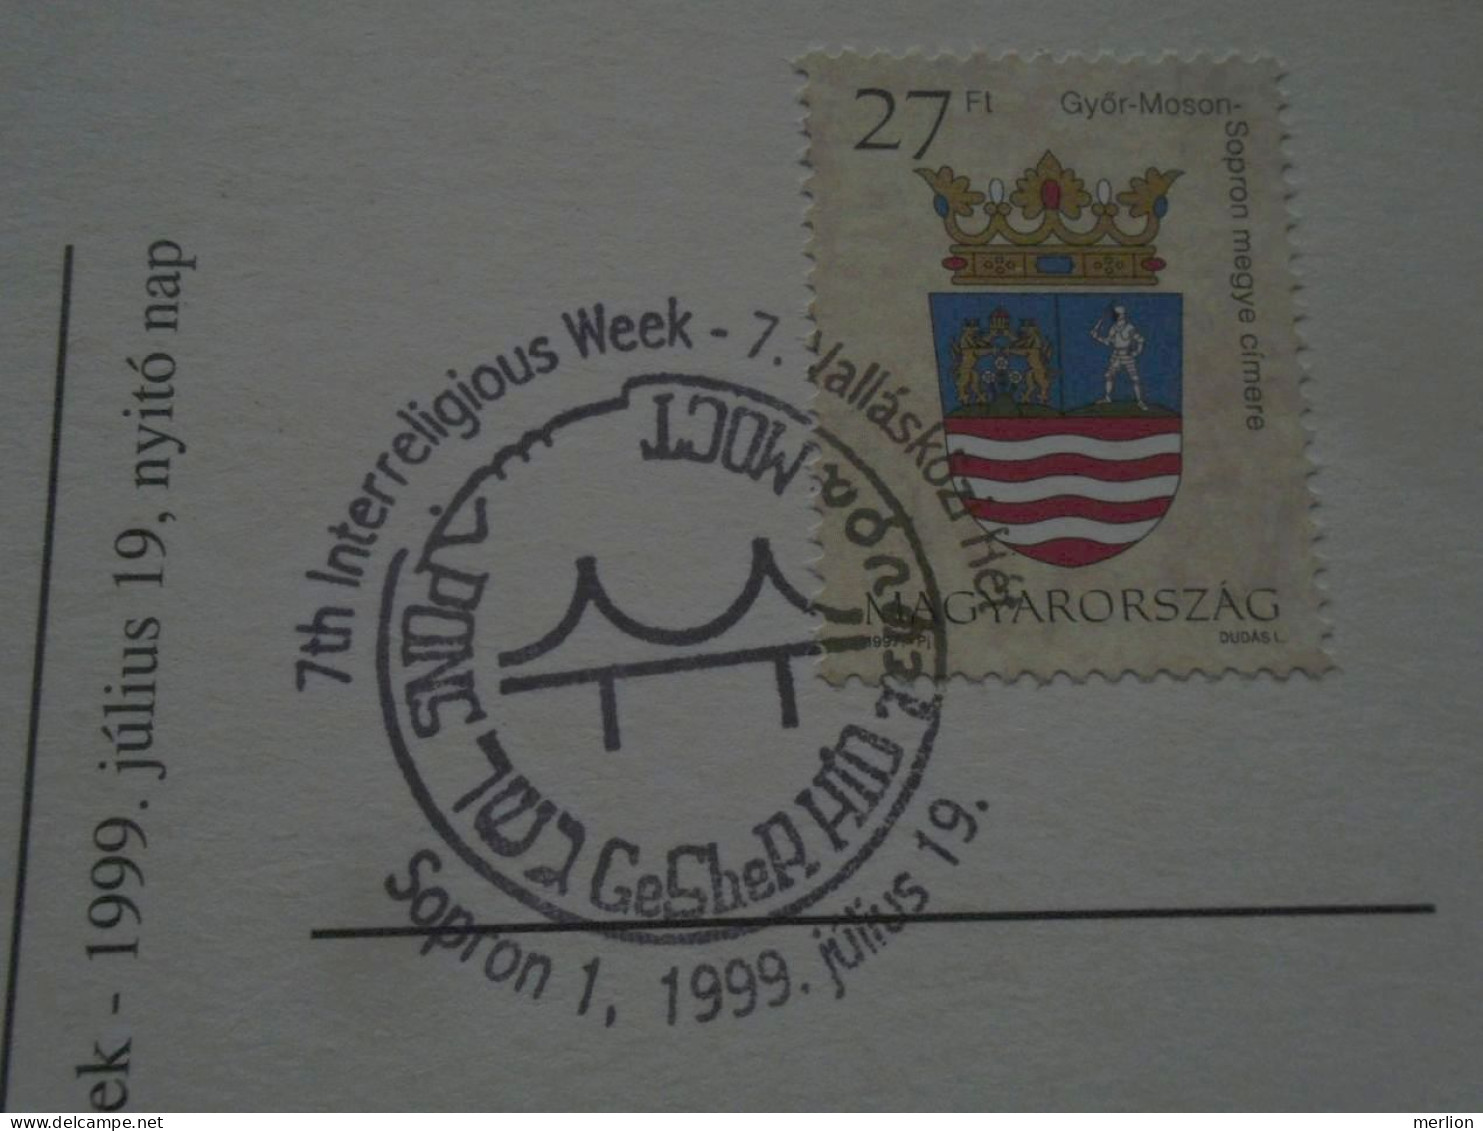 D201009  Hungary  Sopron  - Special Postmark - Interfaith Week Sopron - Jewish Day 1999 Gesher Híd - Judaísmo